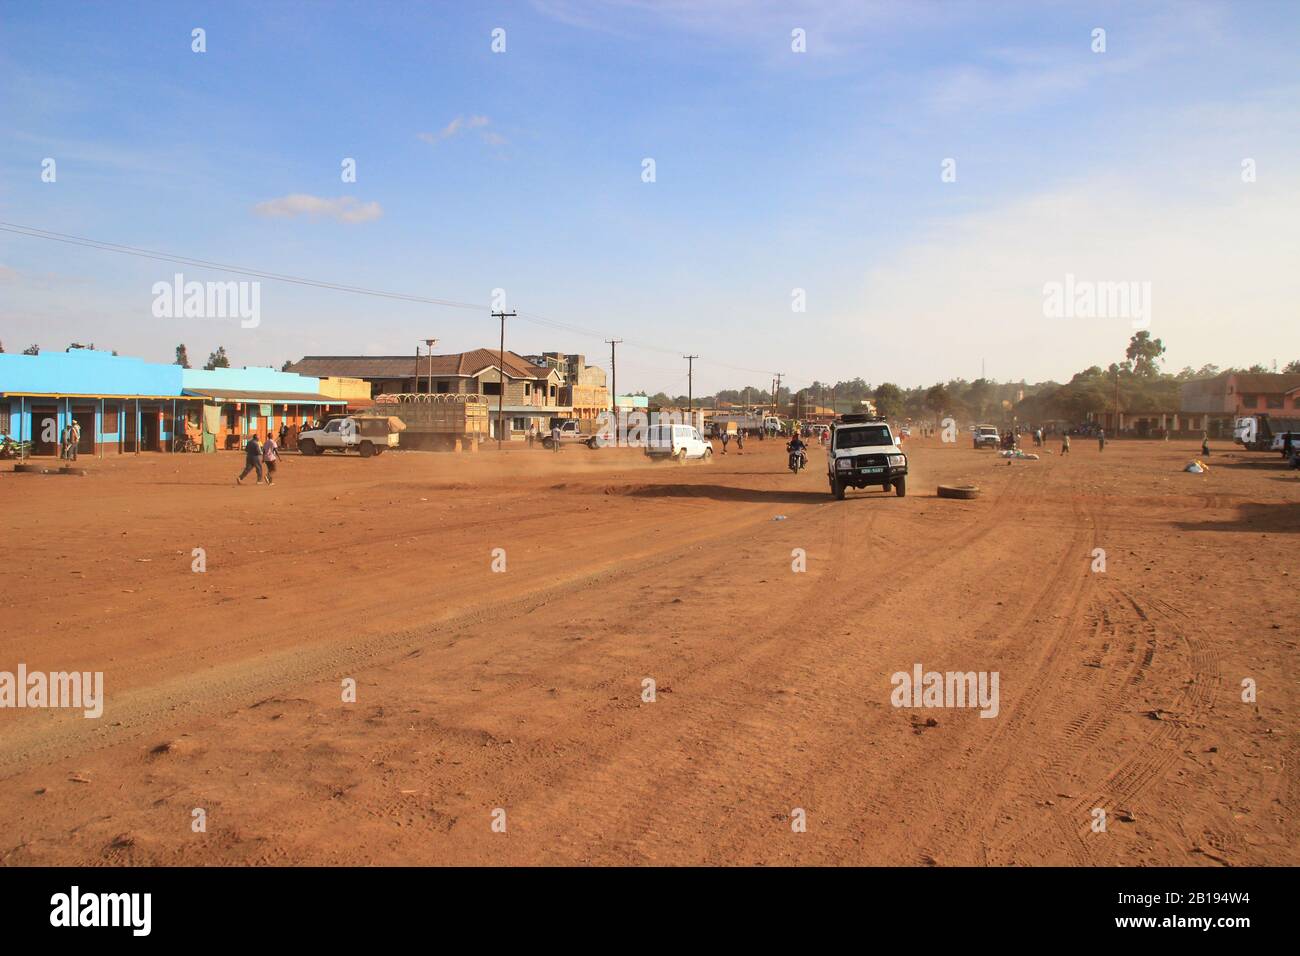 Marsabit, Kenya - 16 gennaio 2015: Una strada cittadina con una strada coperta d'arancia, negozi e un'auto Foto Stock